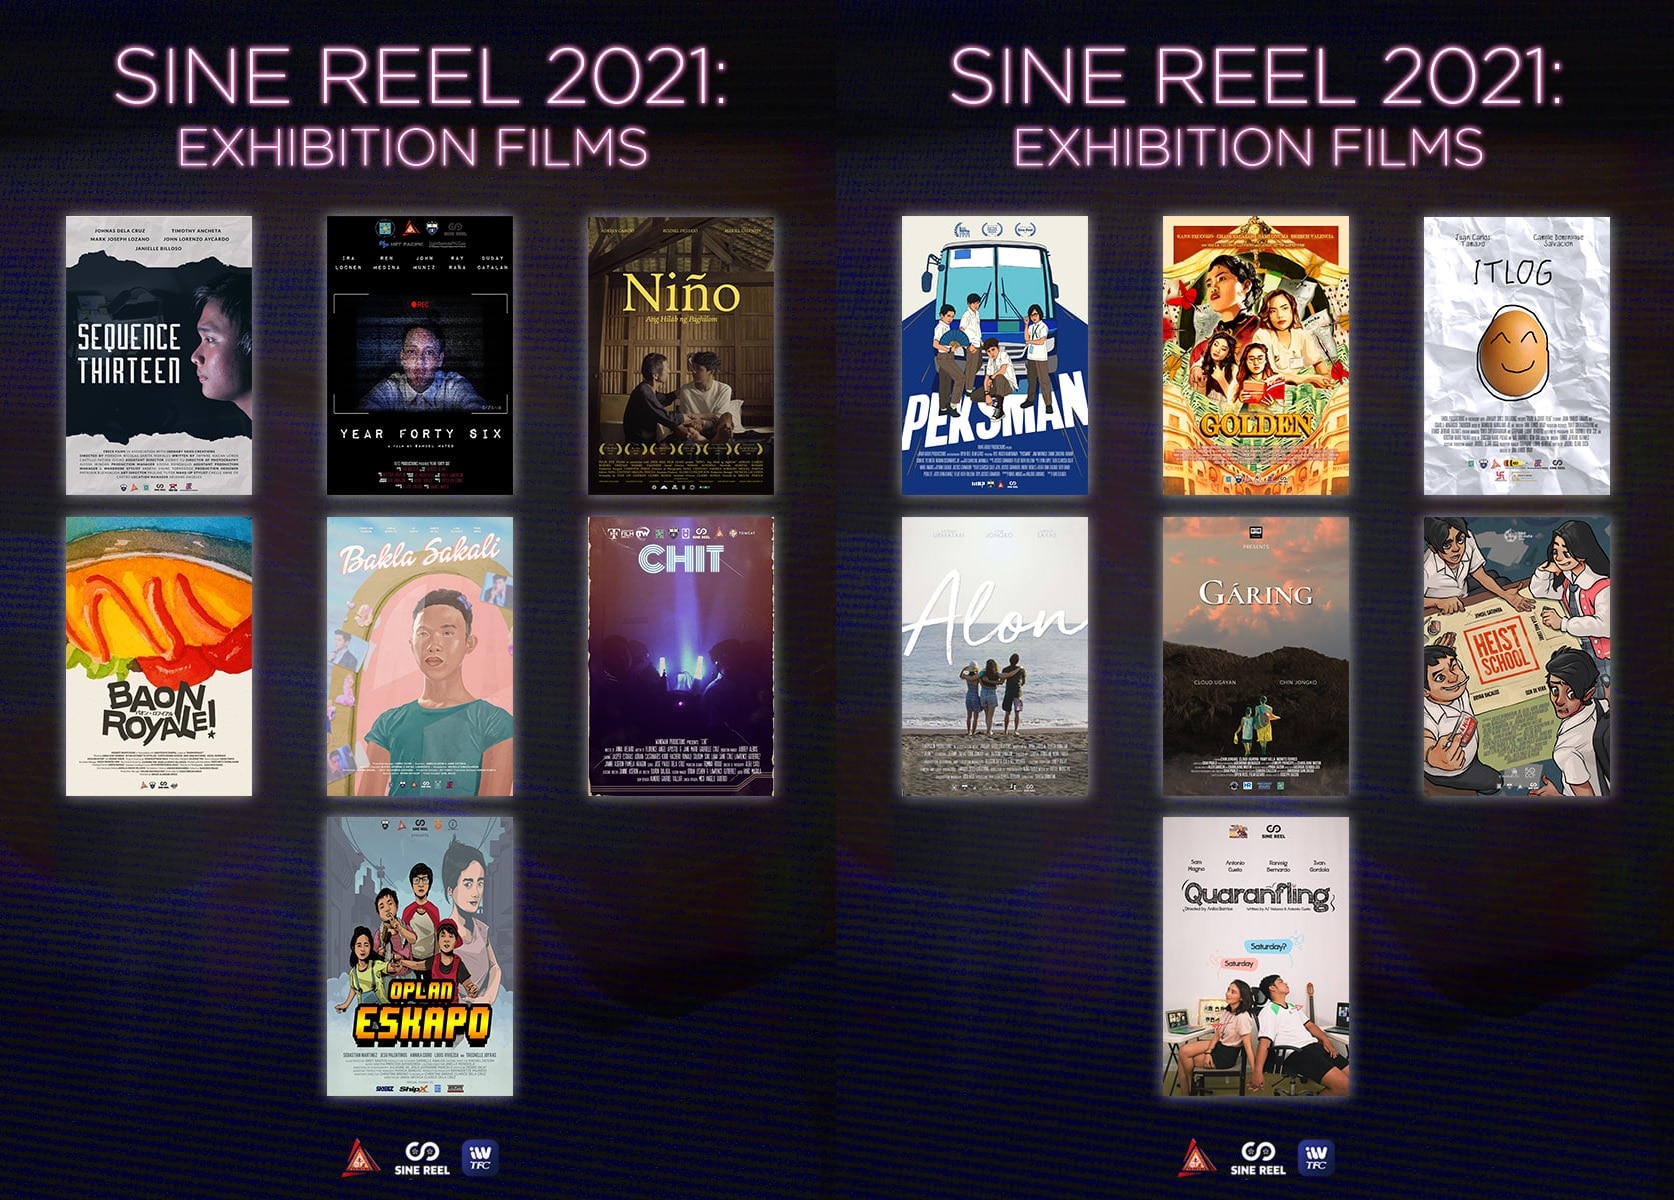 iWantTFC screens 14 student films from UST's Sine Reel 2021